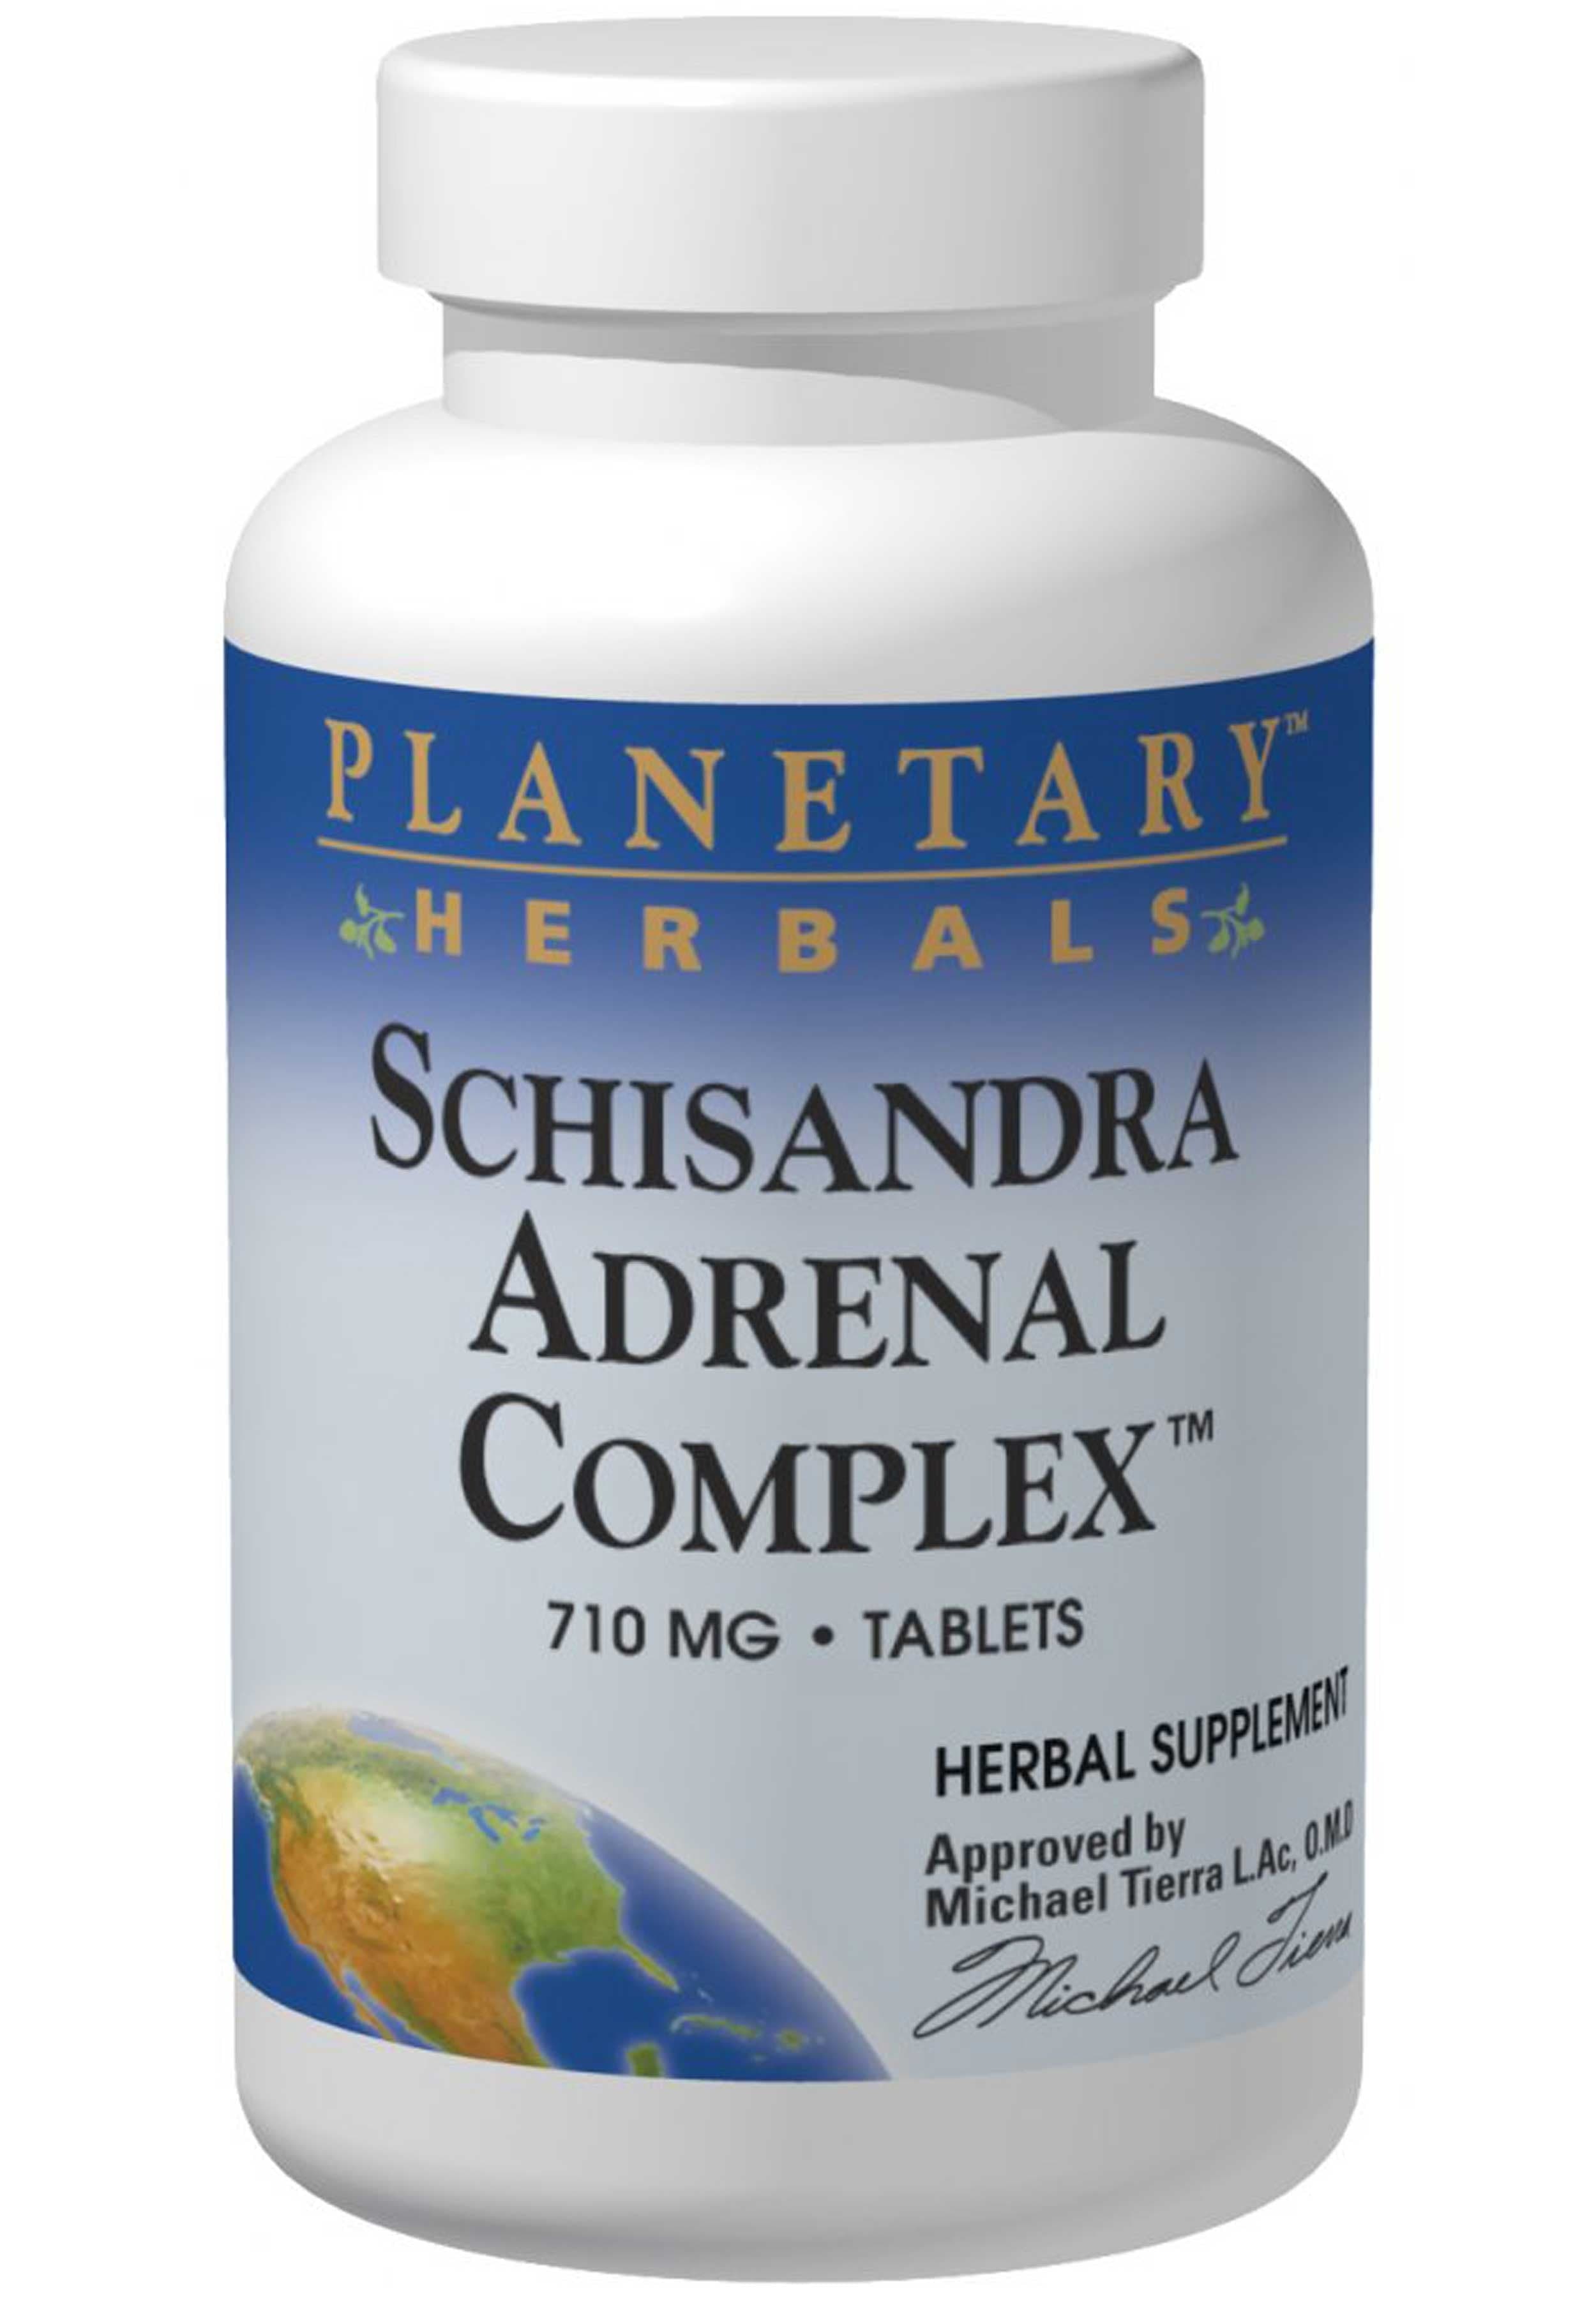 Planetary Herbals Schisandra Adrenal Complex